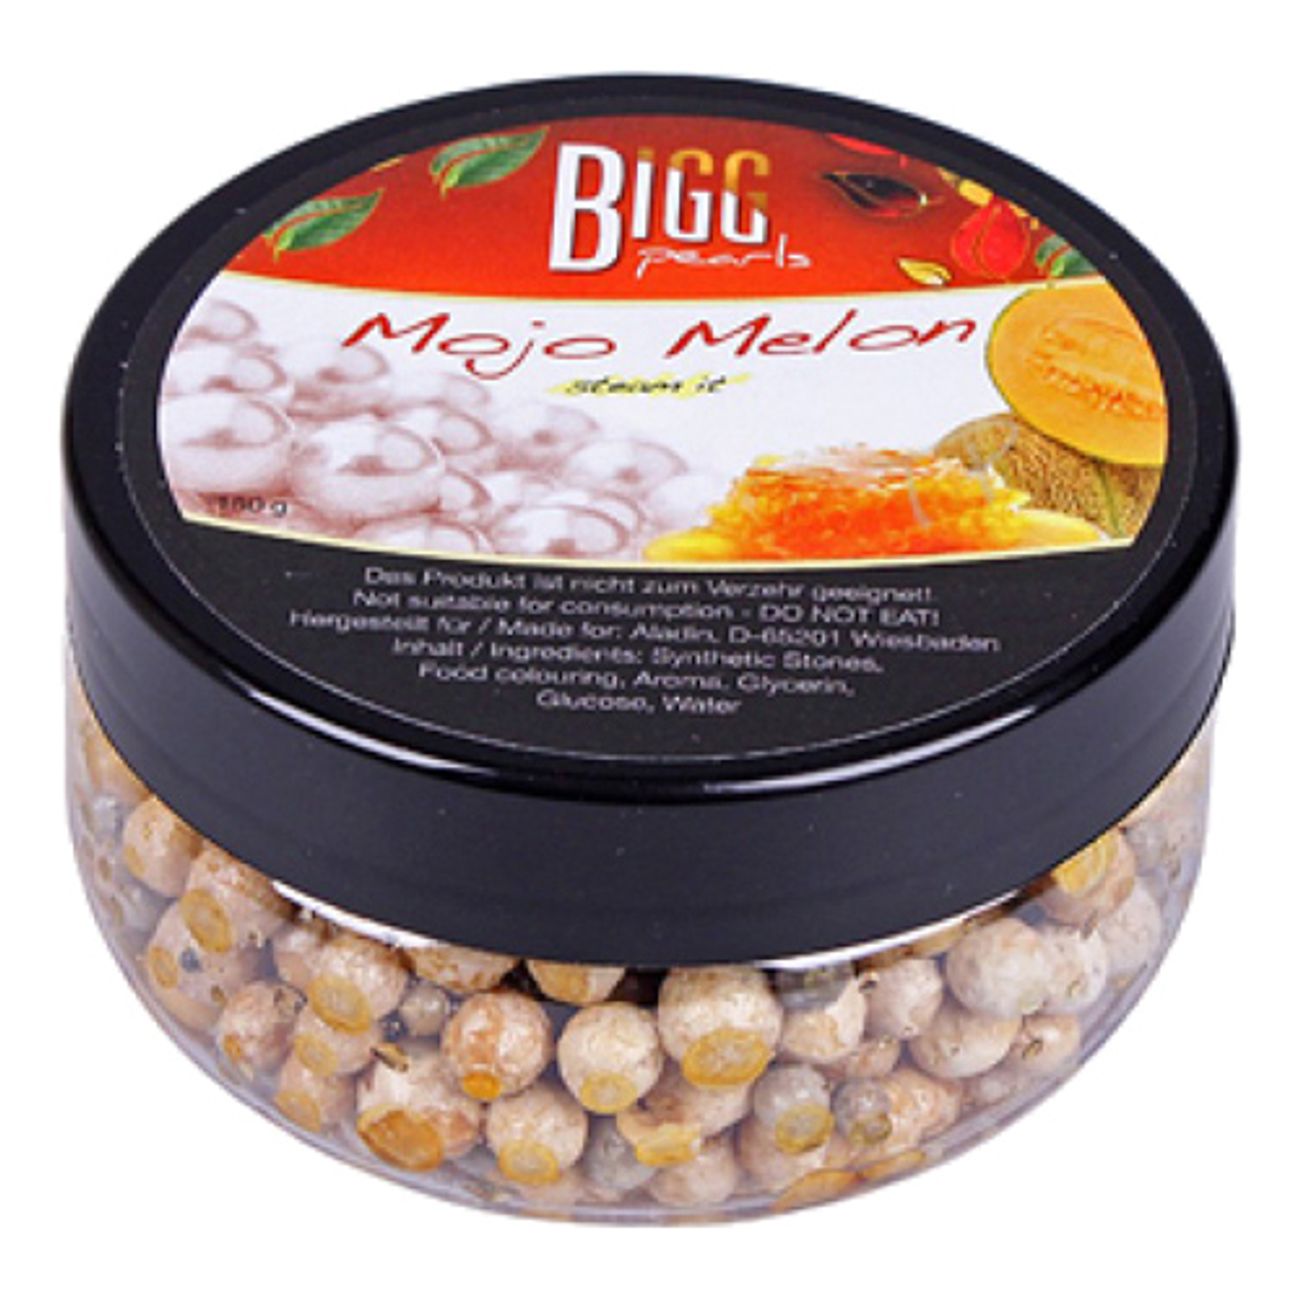 bigg-pearls-mojo-melon-1